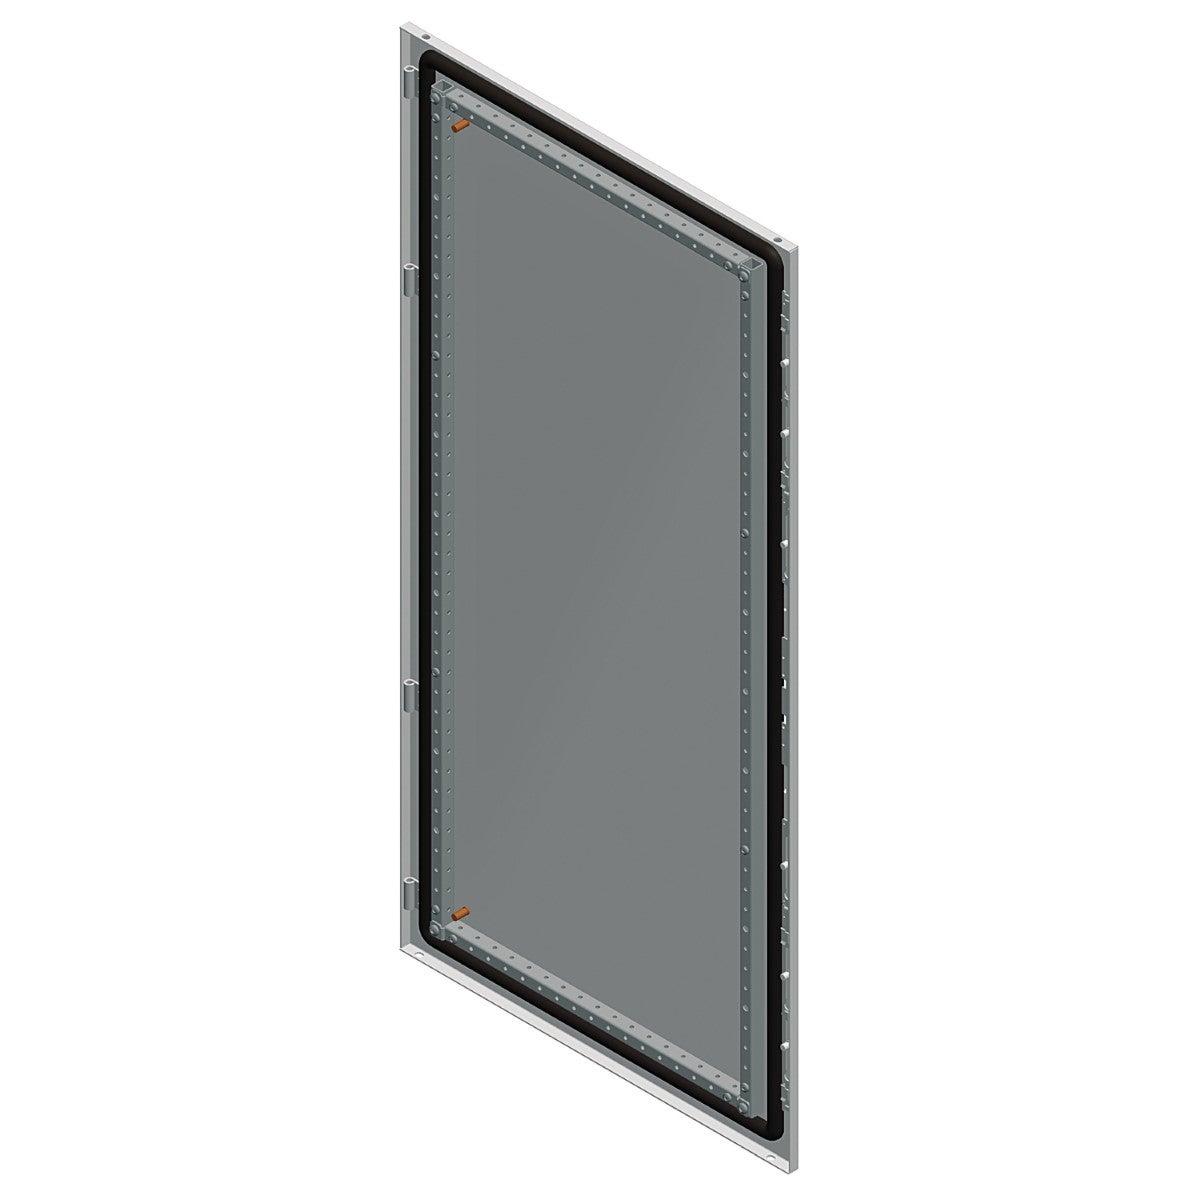 Spacial SF plain door - 2000x800 mm